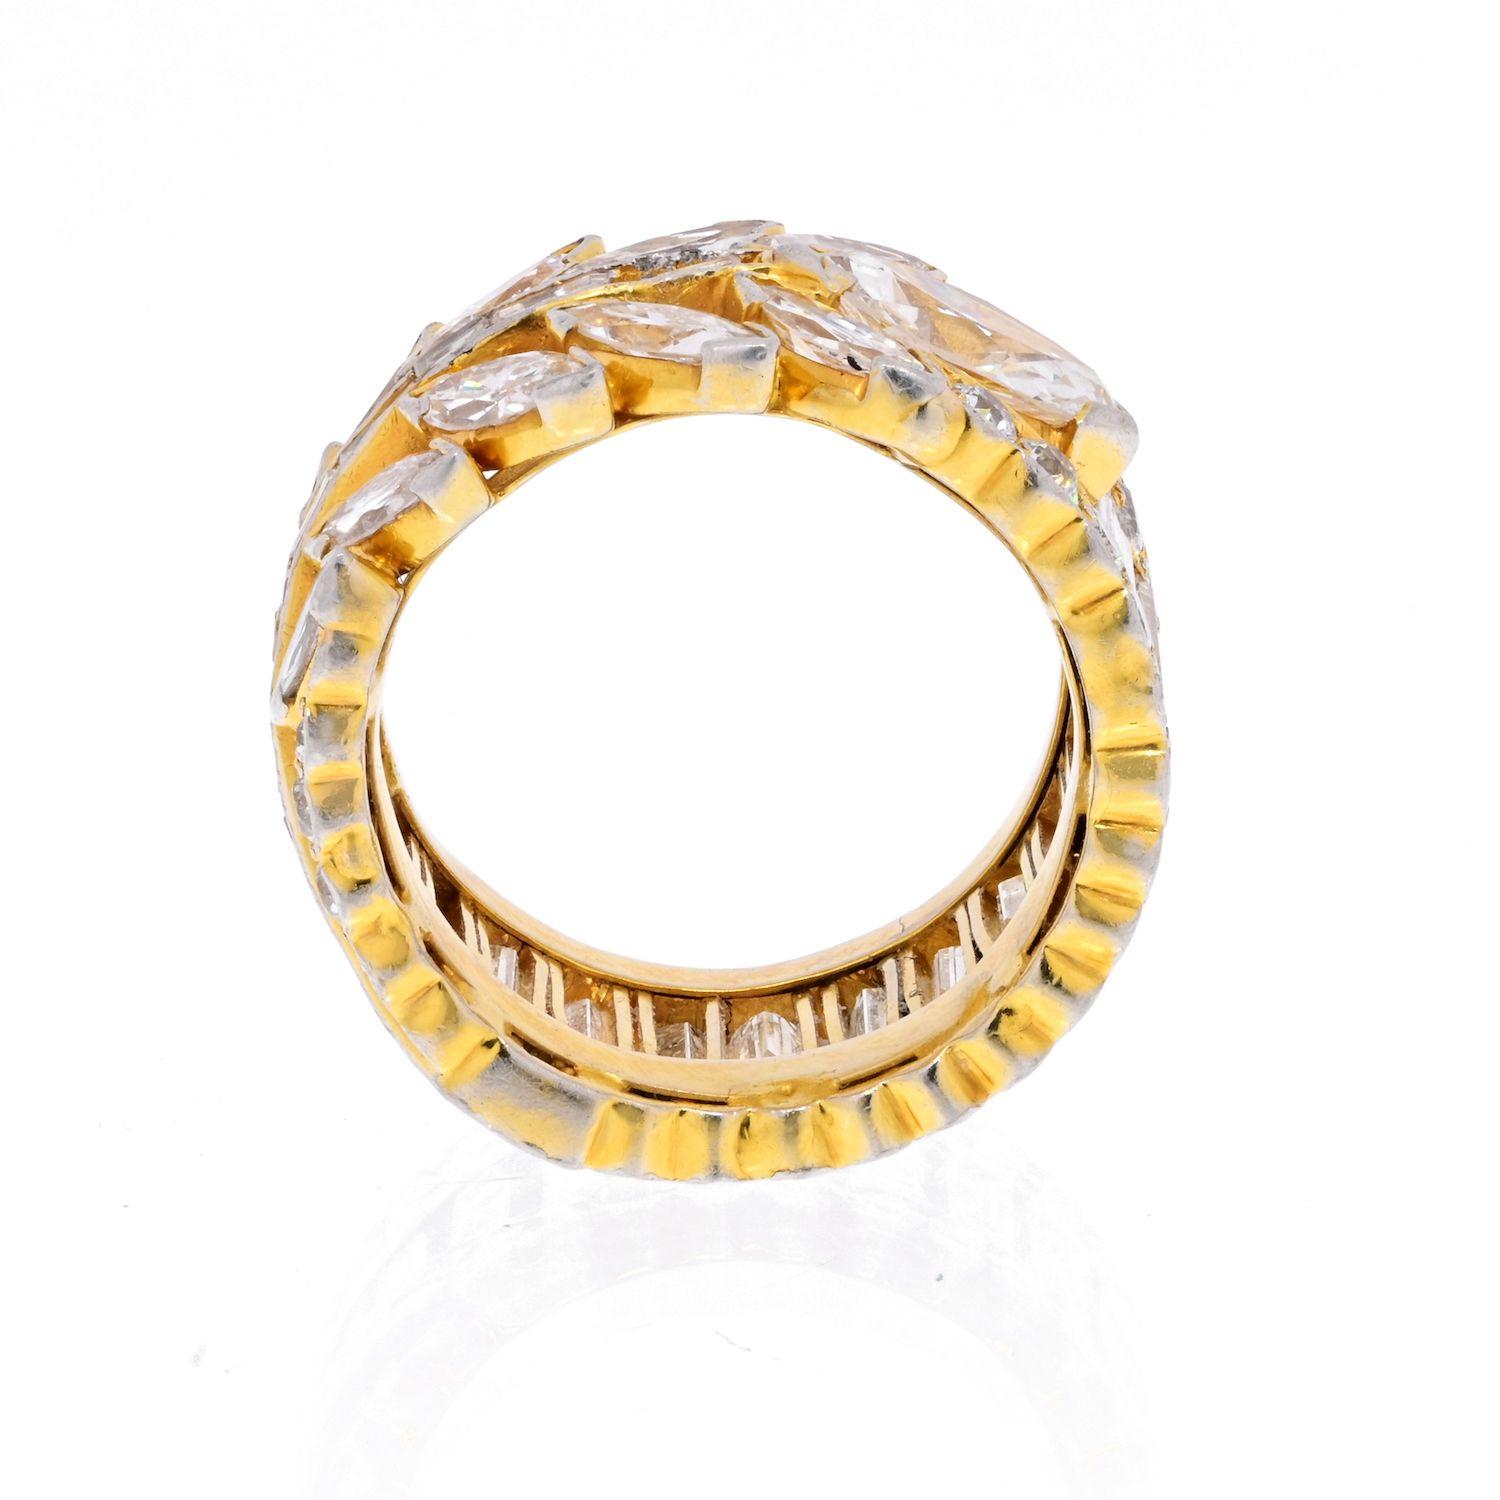 7 carat marquise diamond ring